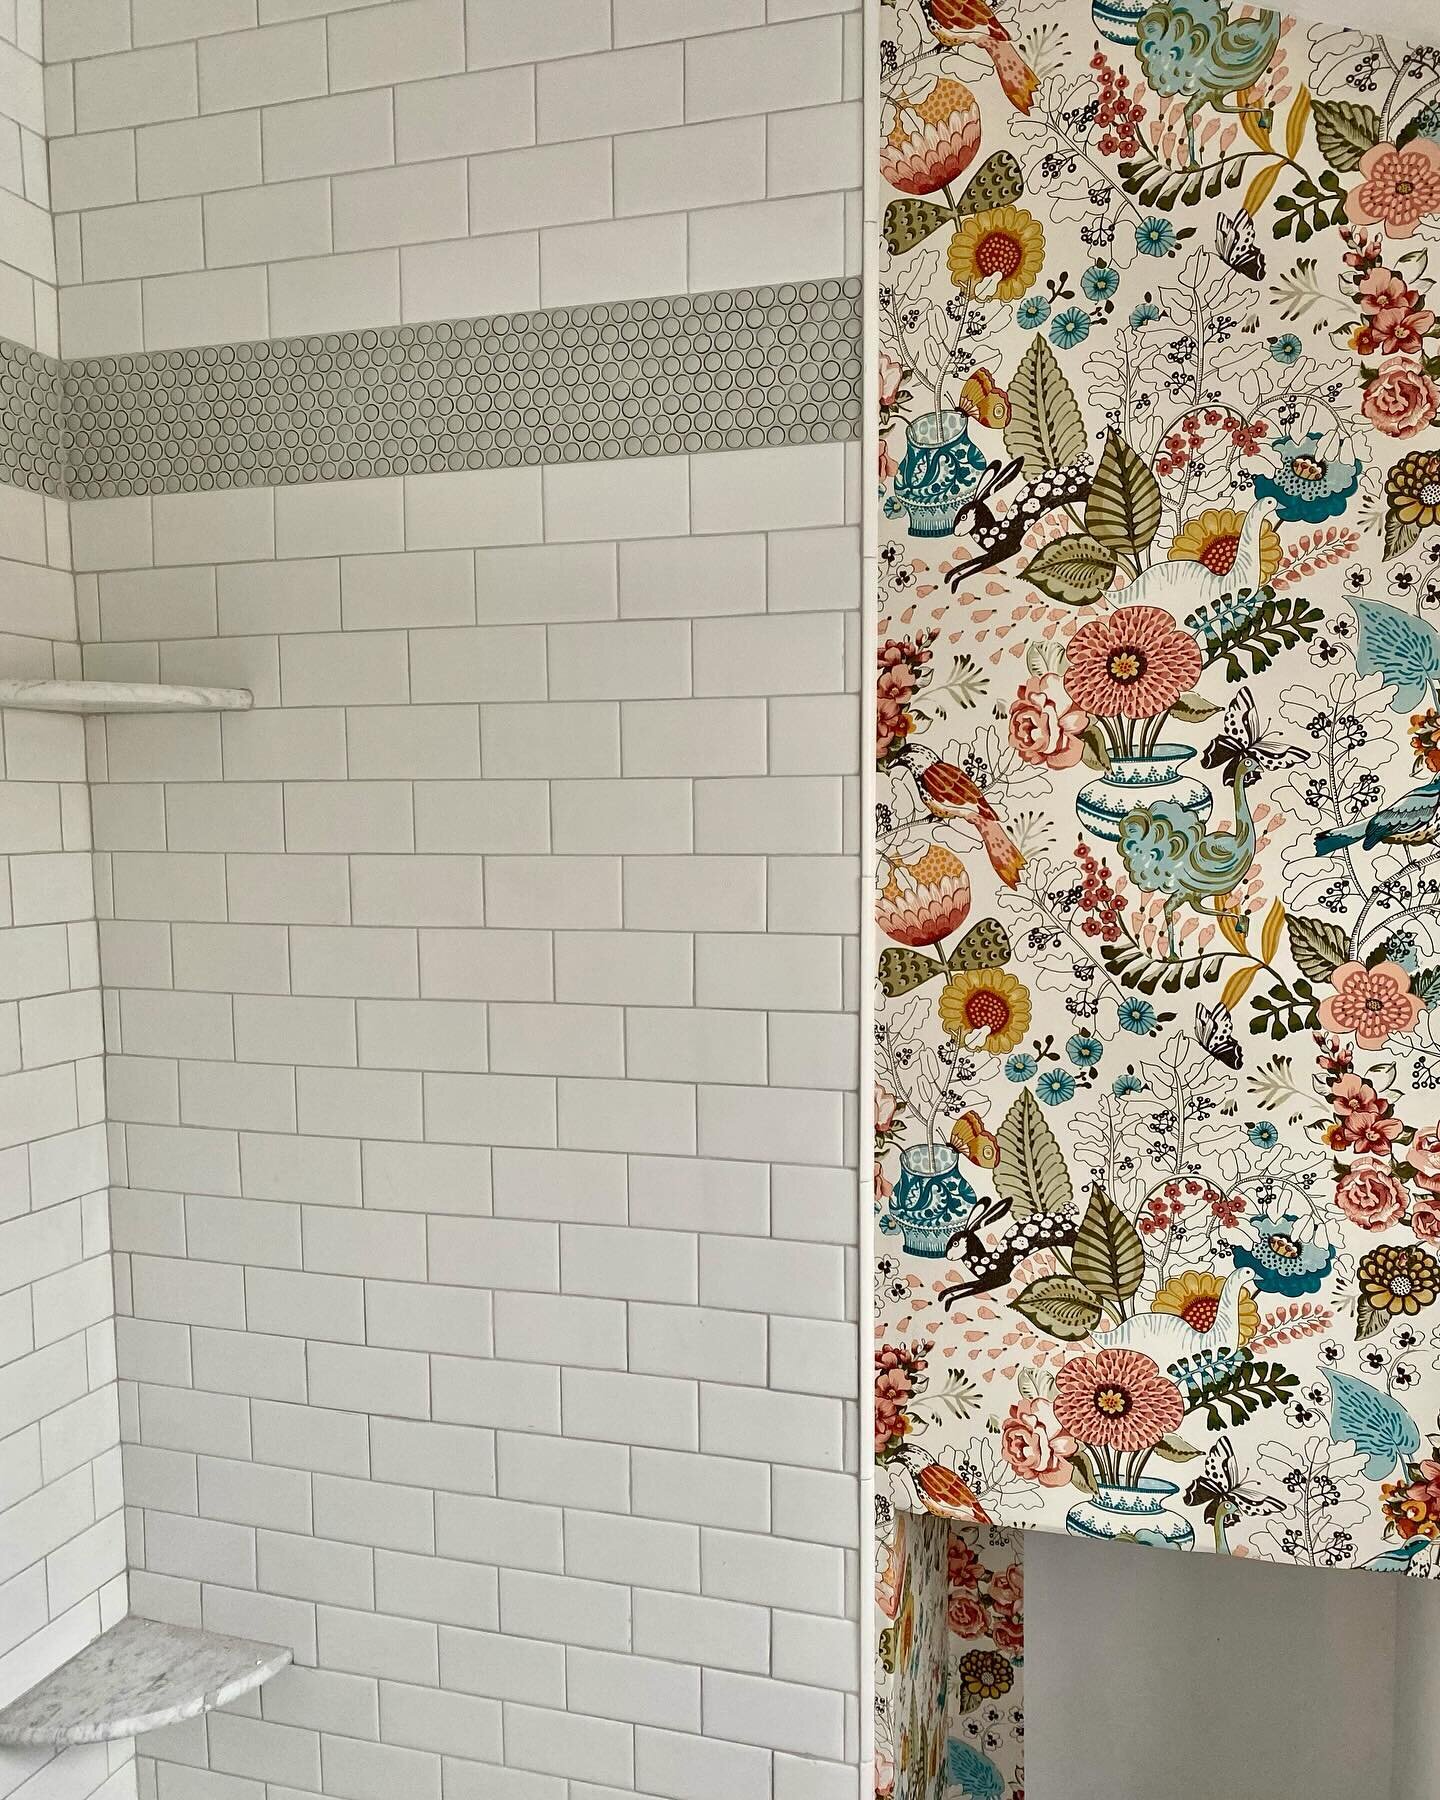 Happy #friyay🎉 #wallpaper is going up and this #bathroomrenovation is getting exciting! #pennytile #subwaytile #wallpaperbathroom #interiordesign #interiordesigner #olivehilldesigncompany #njinteriordesign #njinteriordesigner